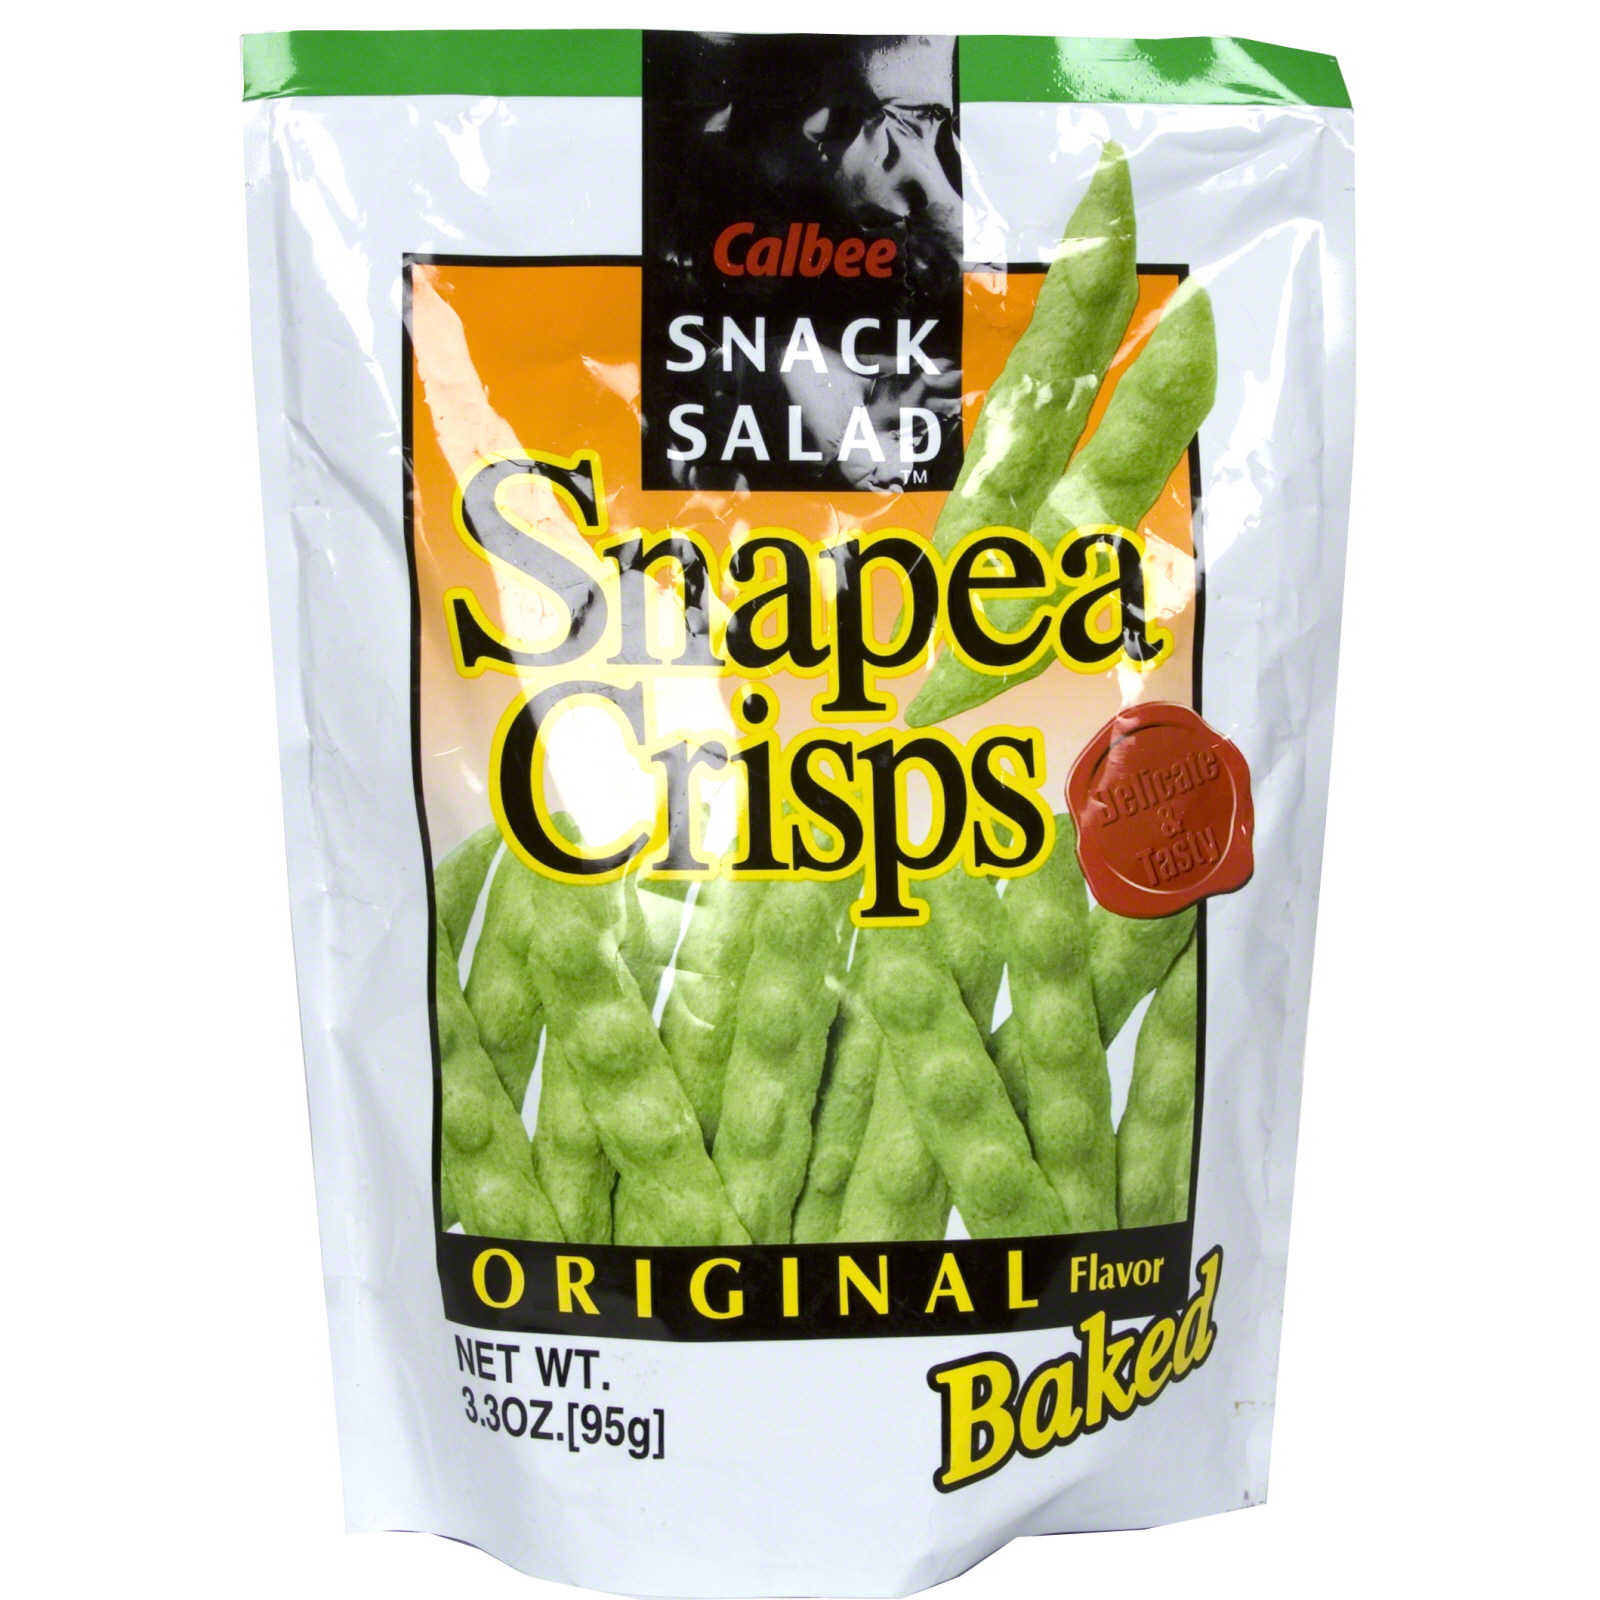 Calbee Snack Salad Snapea Crisps, Original Flavor, Baked, 3.3 oz (95 g)